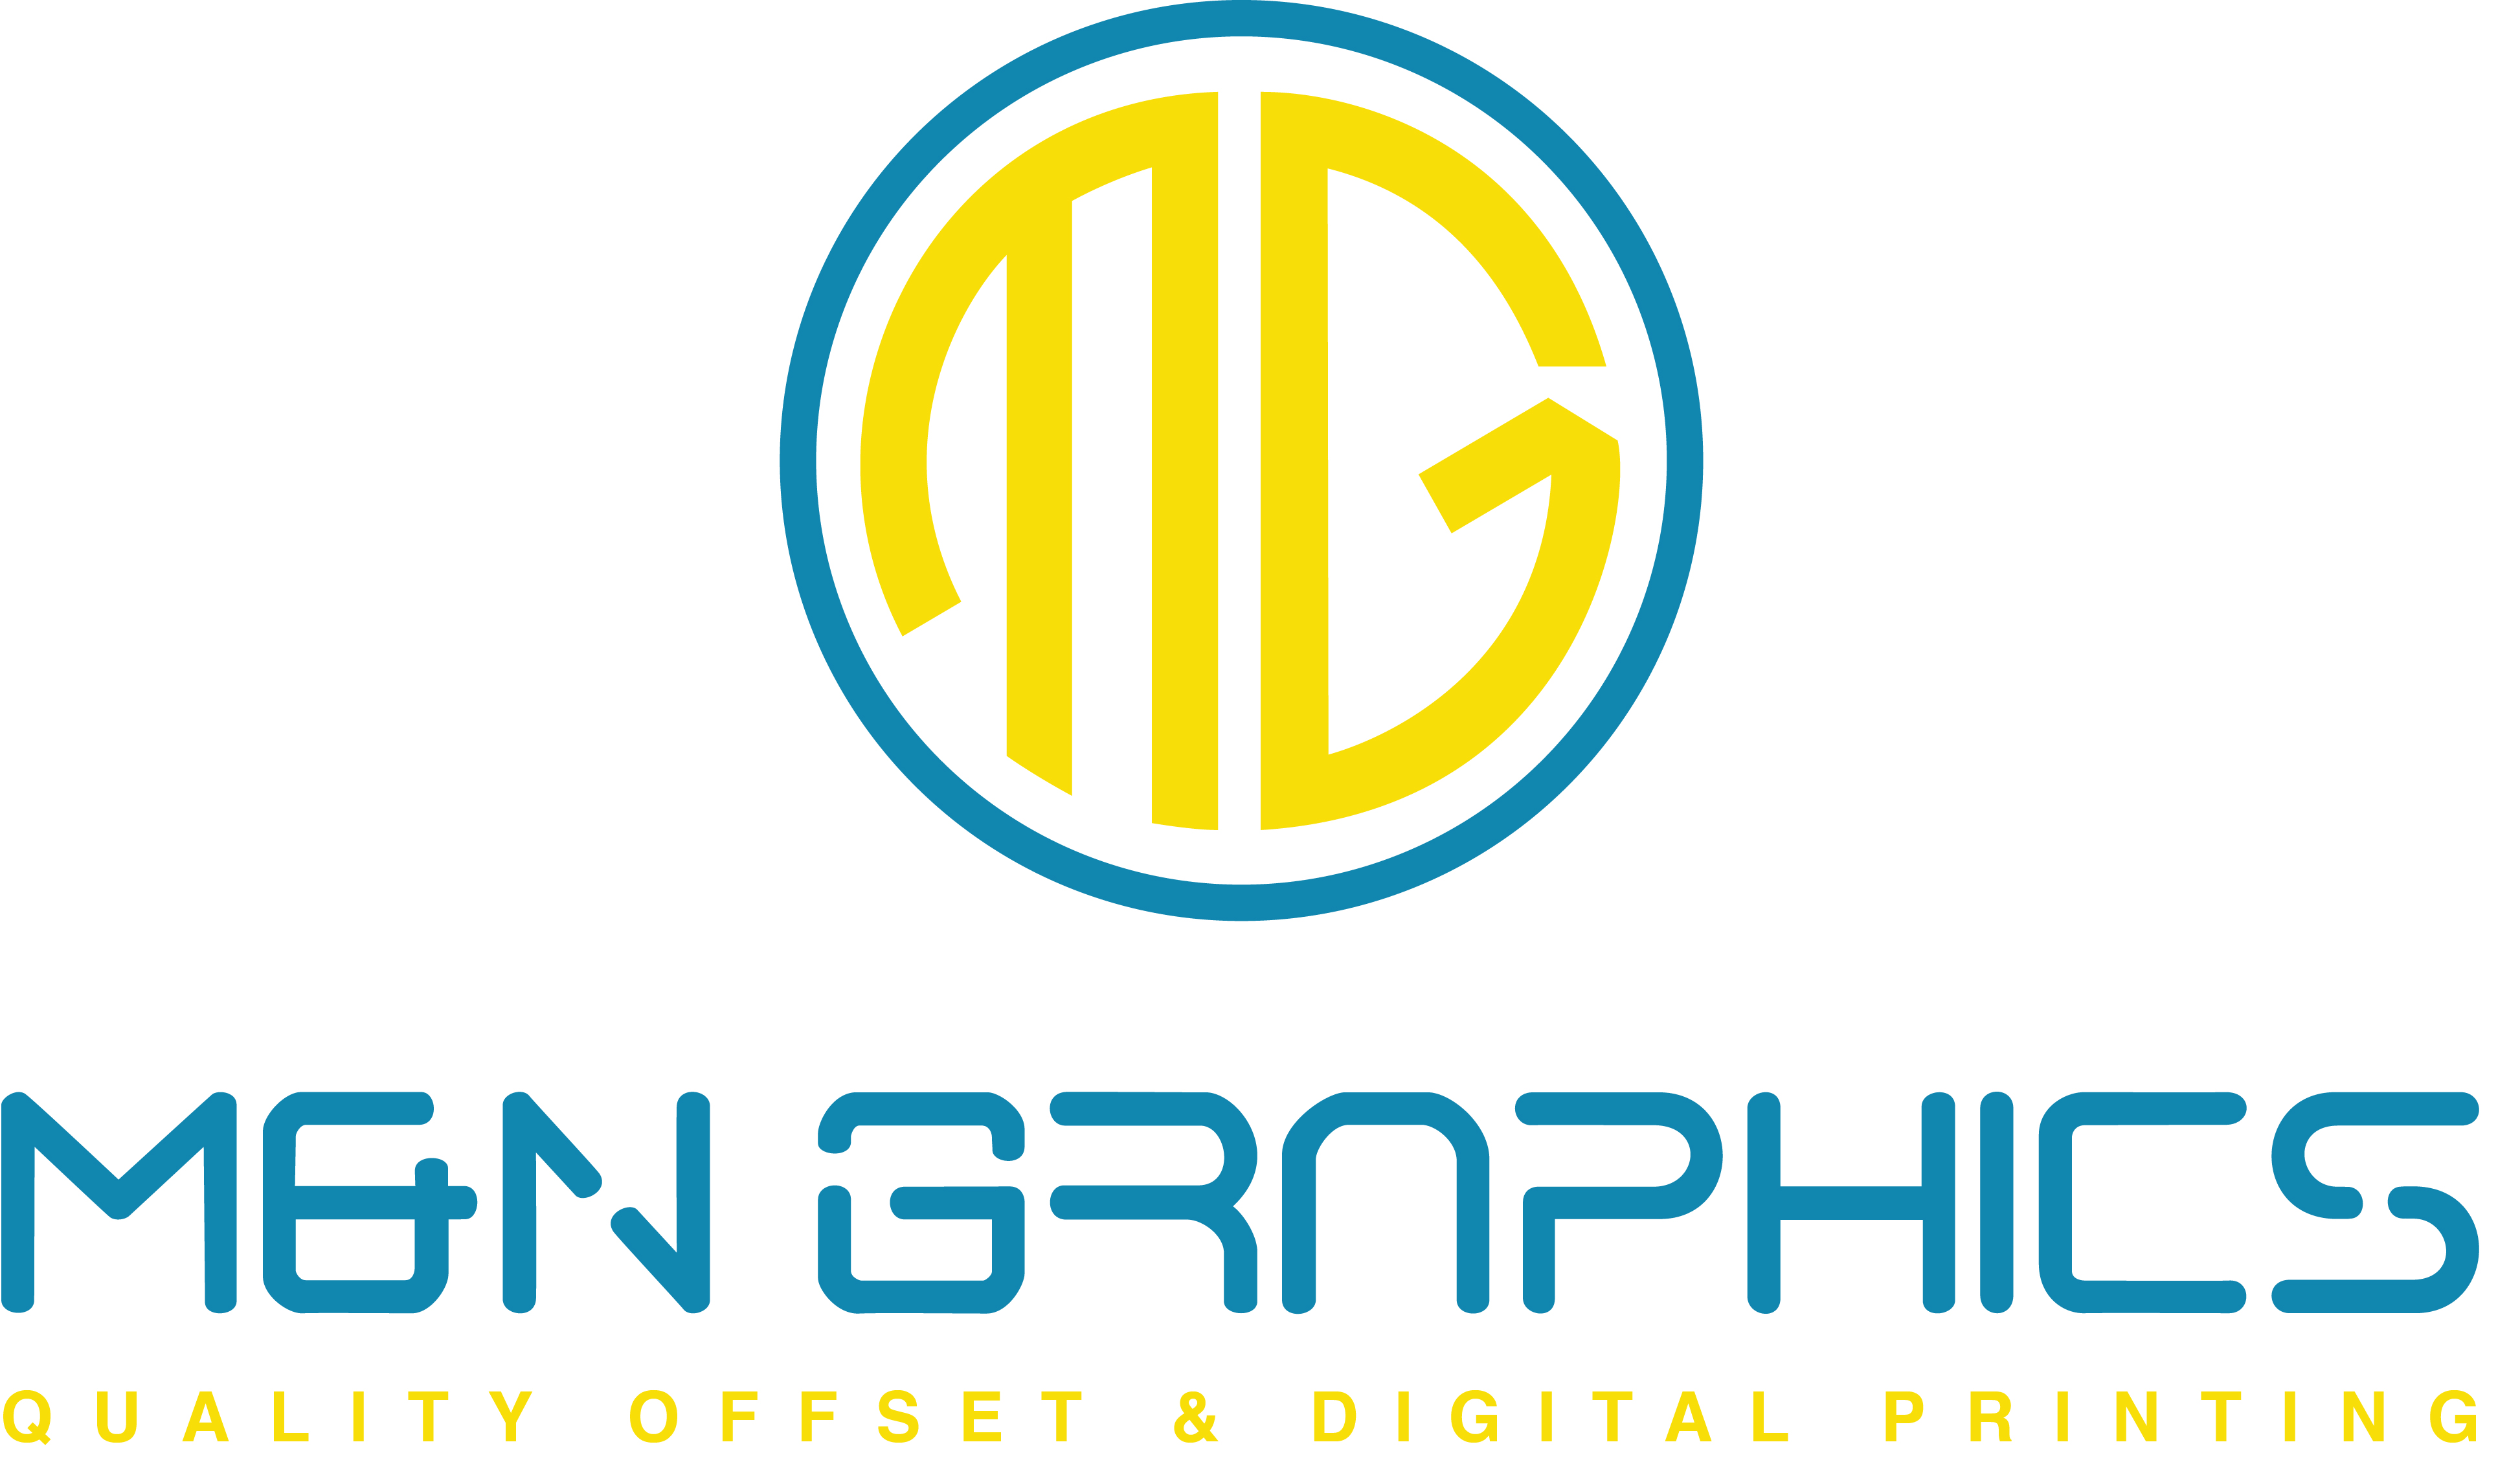 M & N Graphics